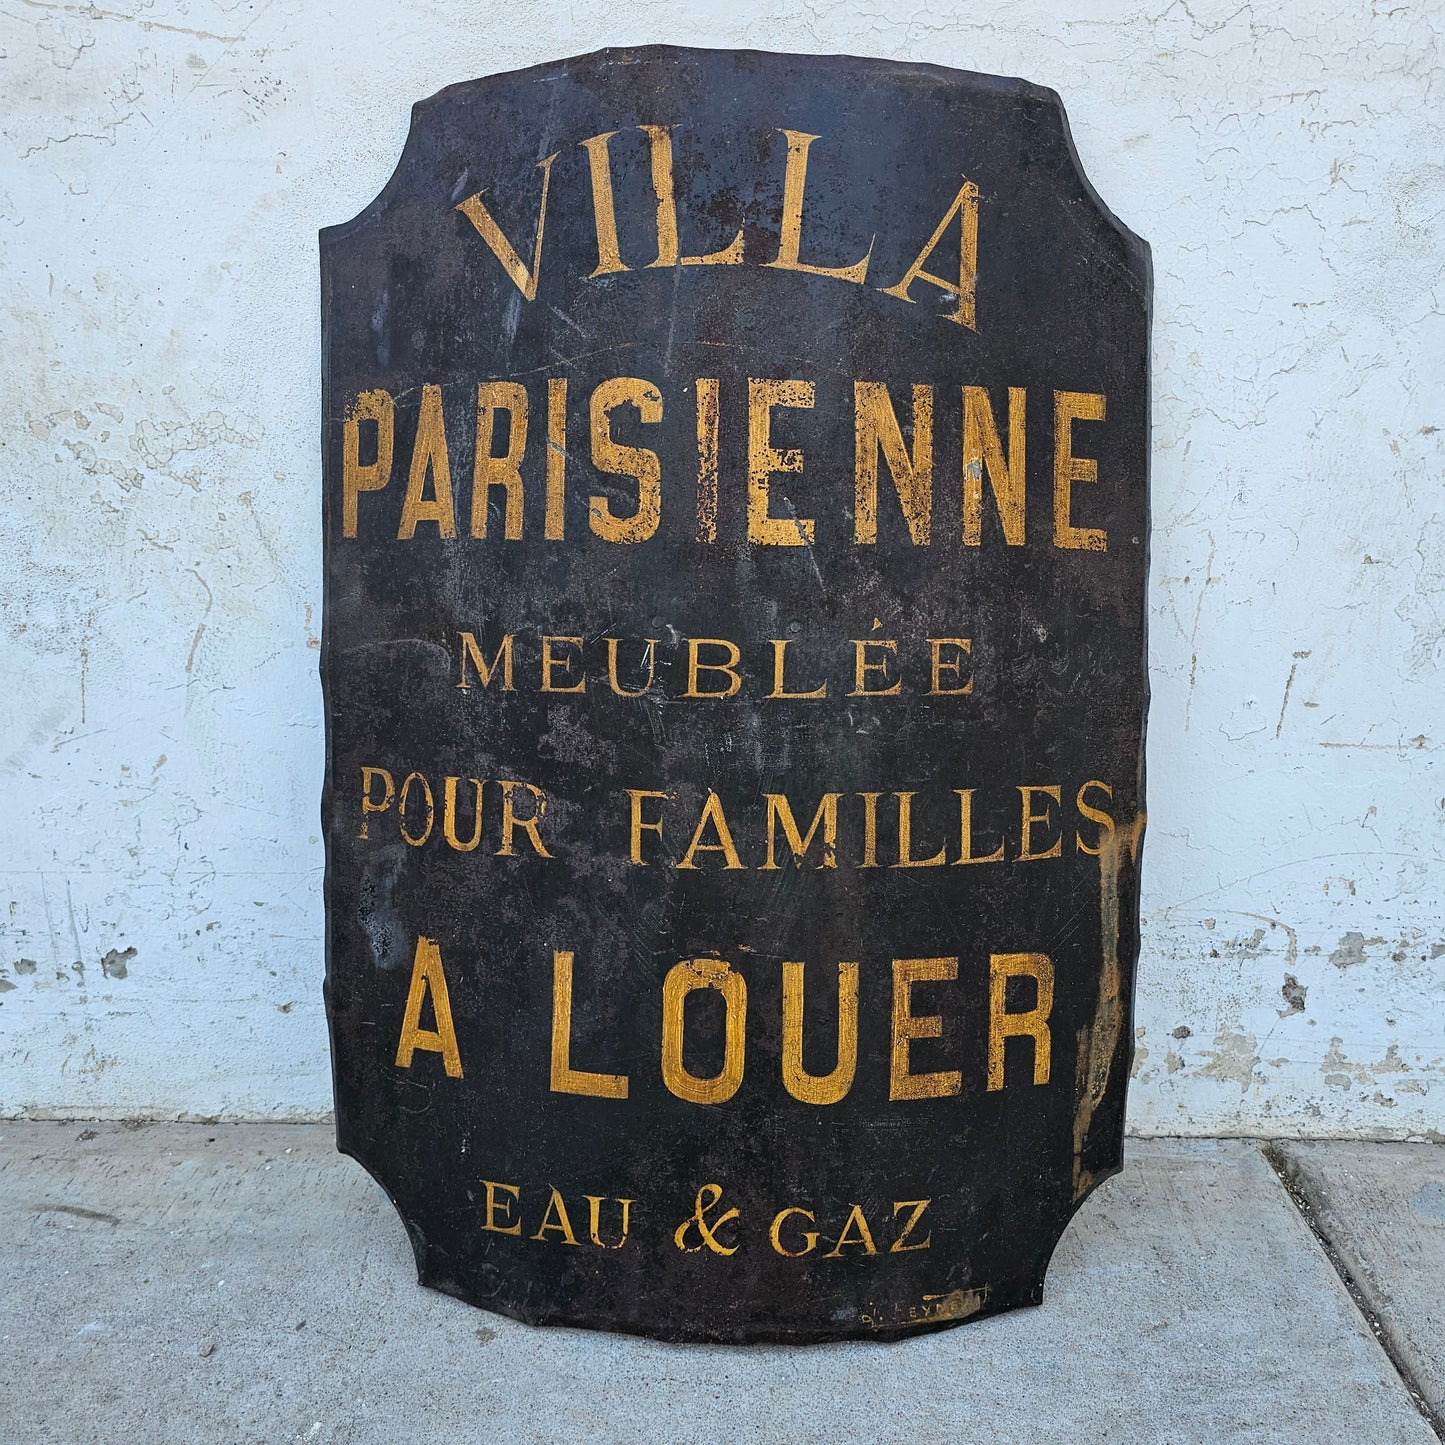 Antique French Metal Sign "Villa Parisienne Sign"